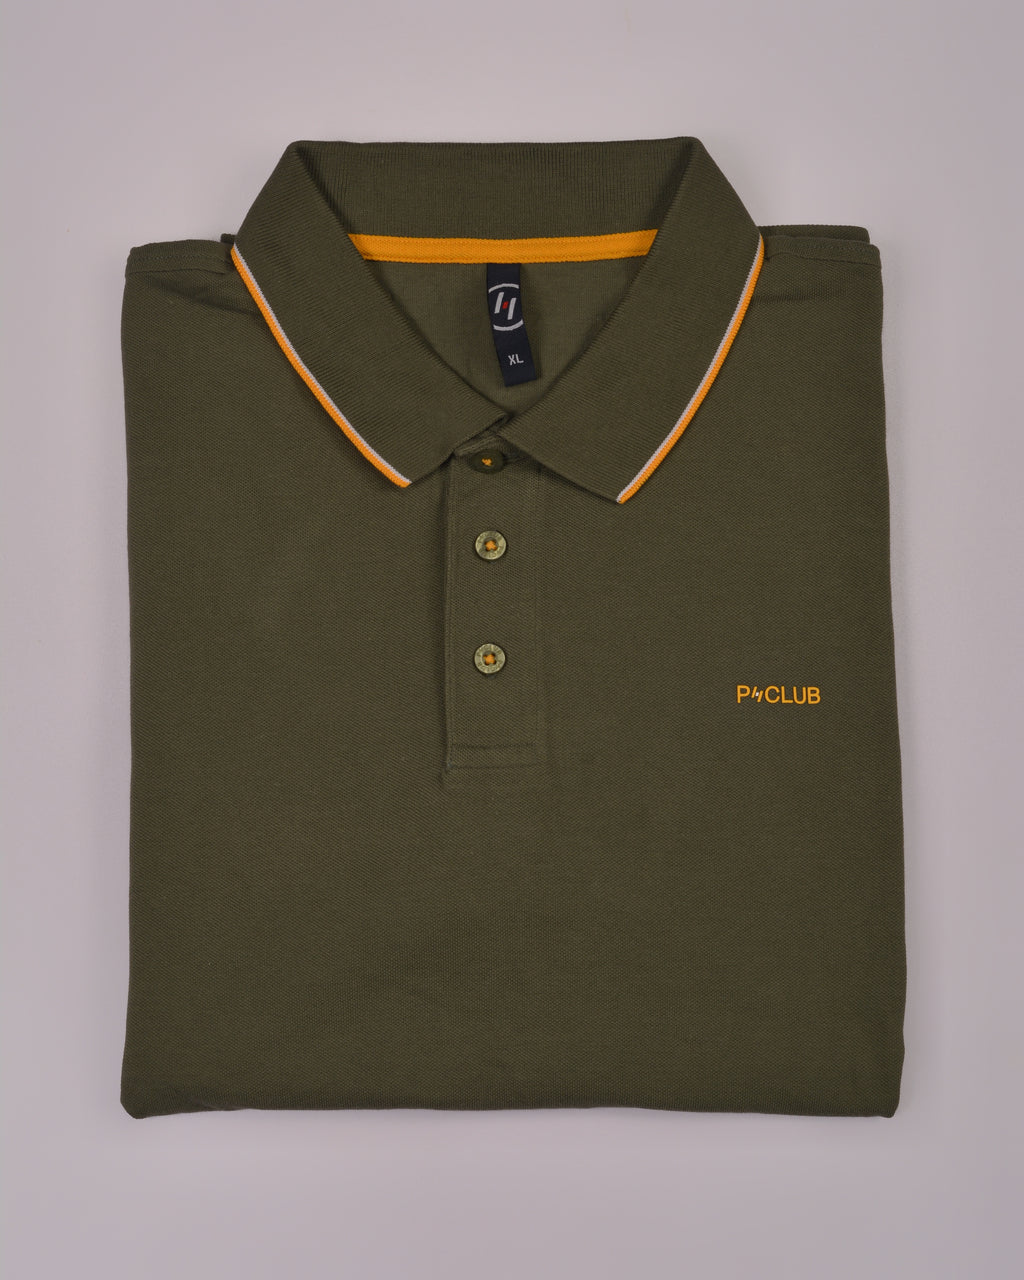 Polo club Men's Classic Polo Shirt olive